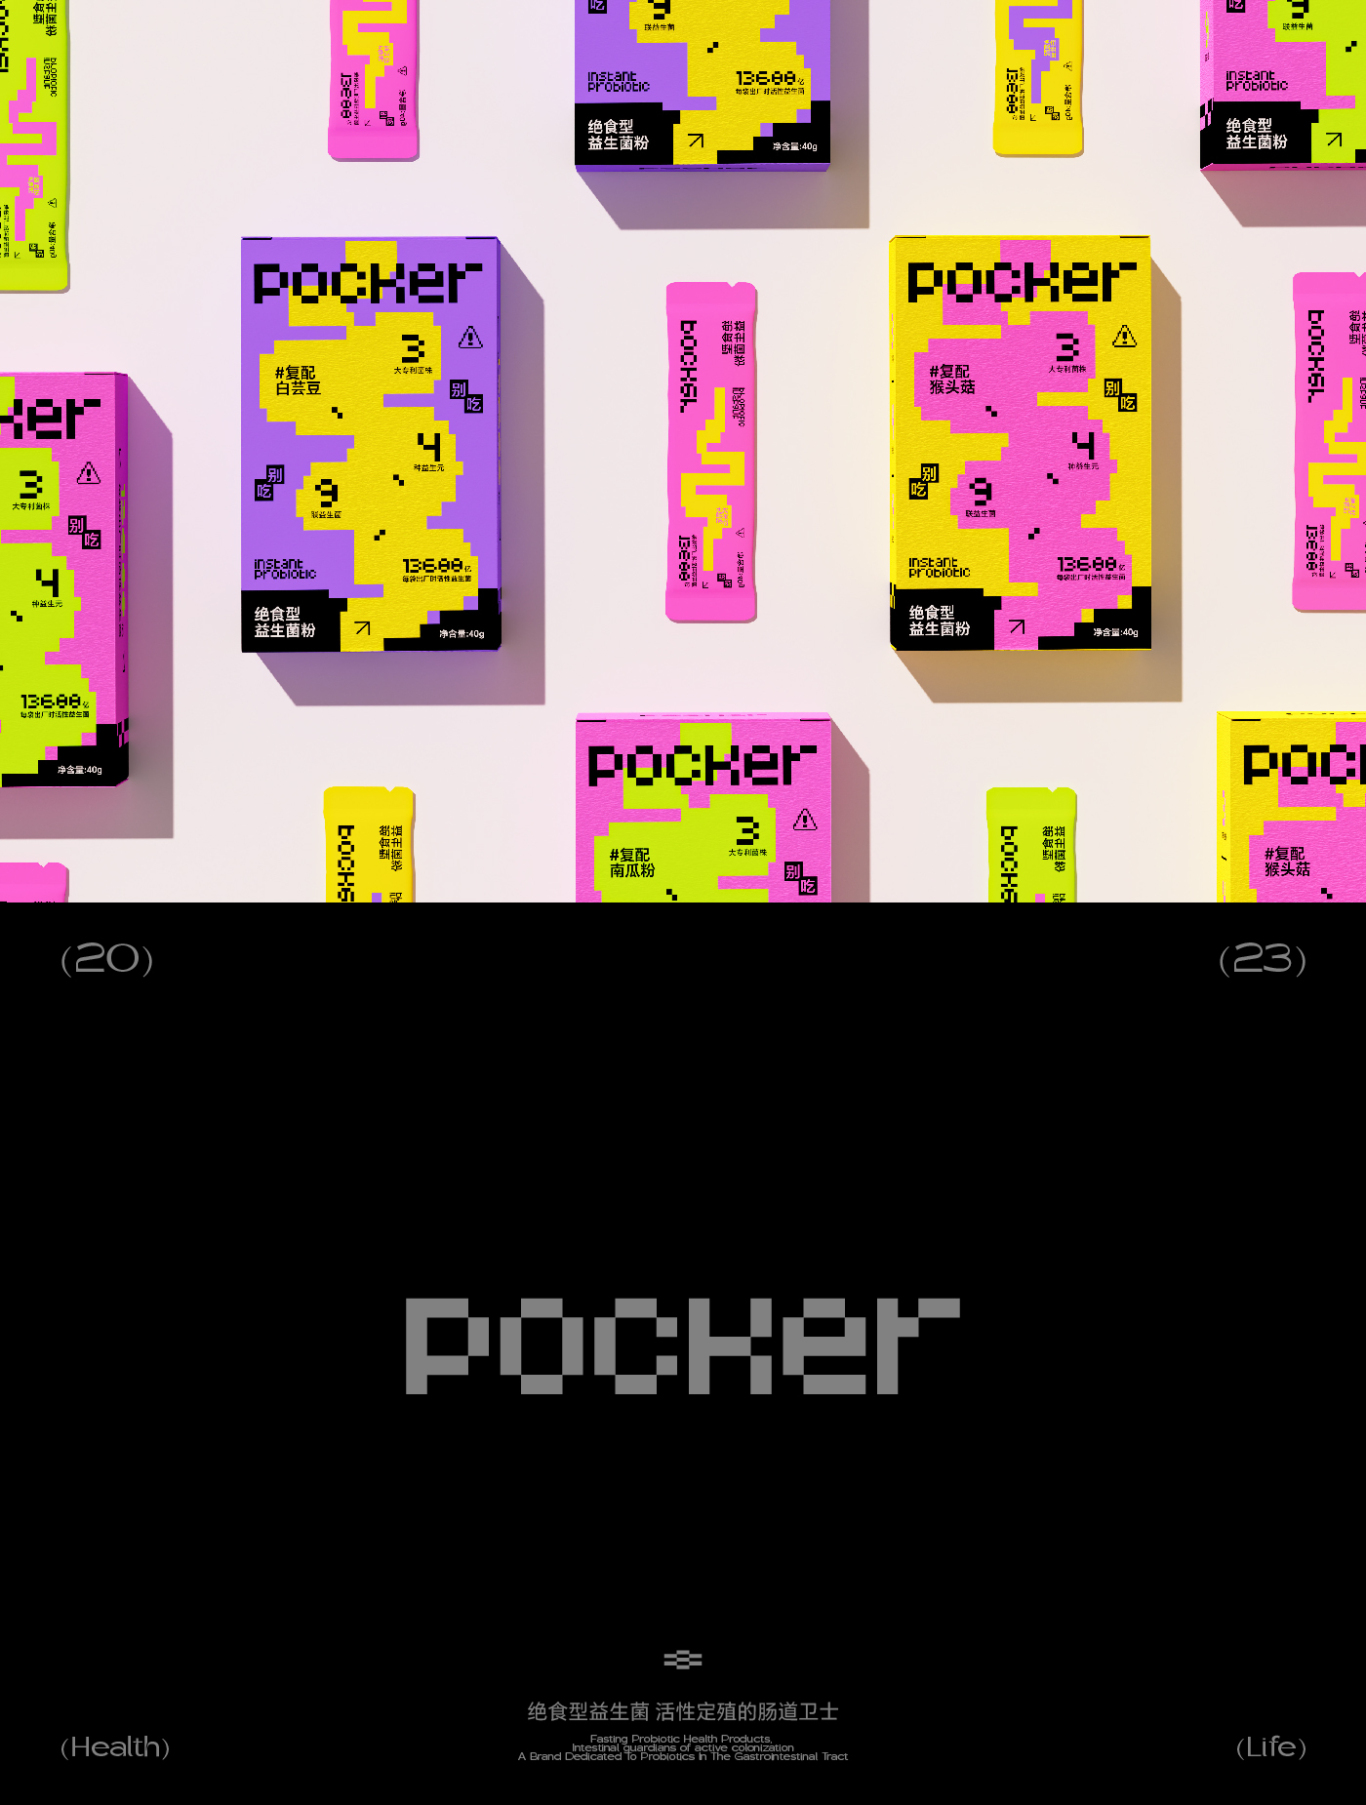 POCKER X 绝食型肠道卫士·别吃别吃丨益生菌包装设计图9